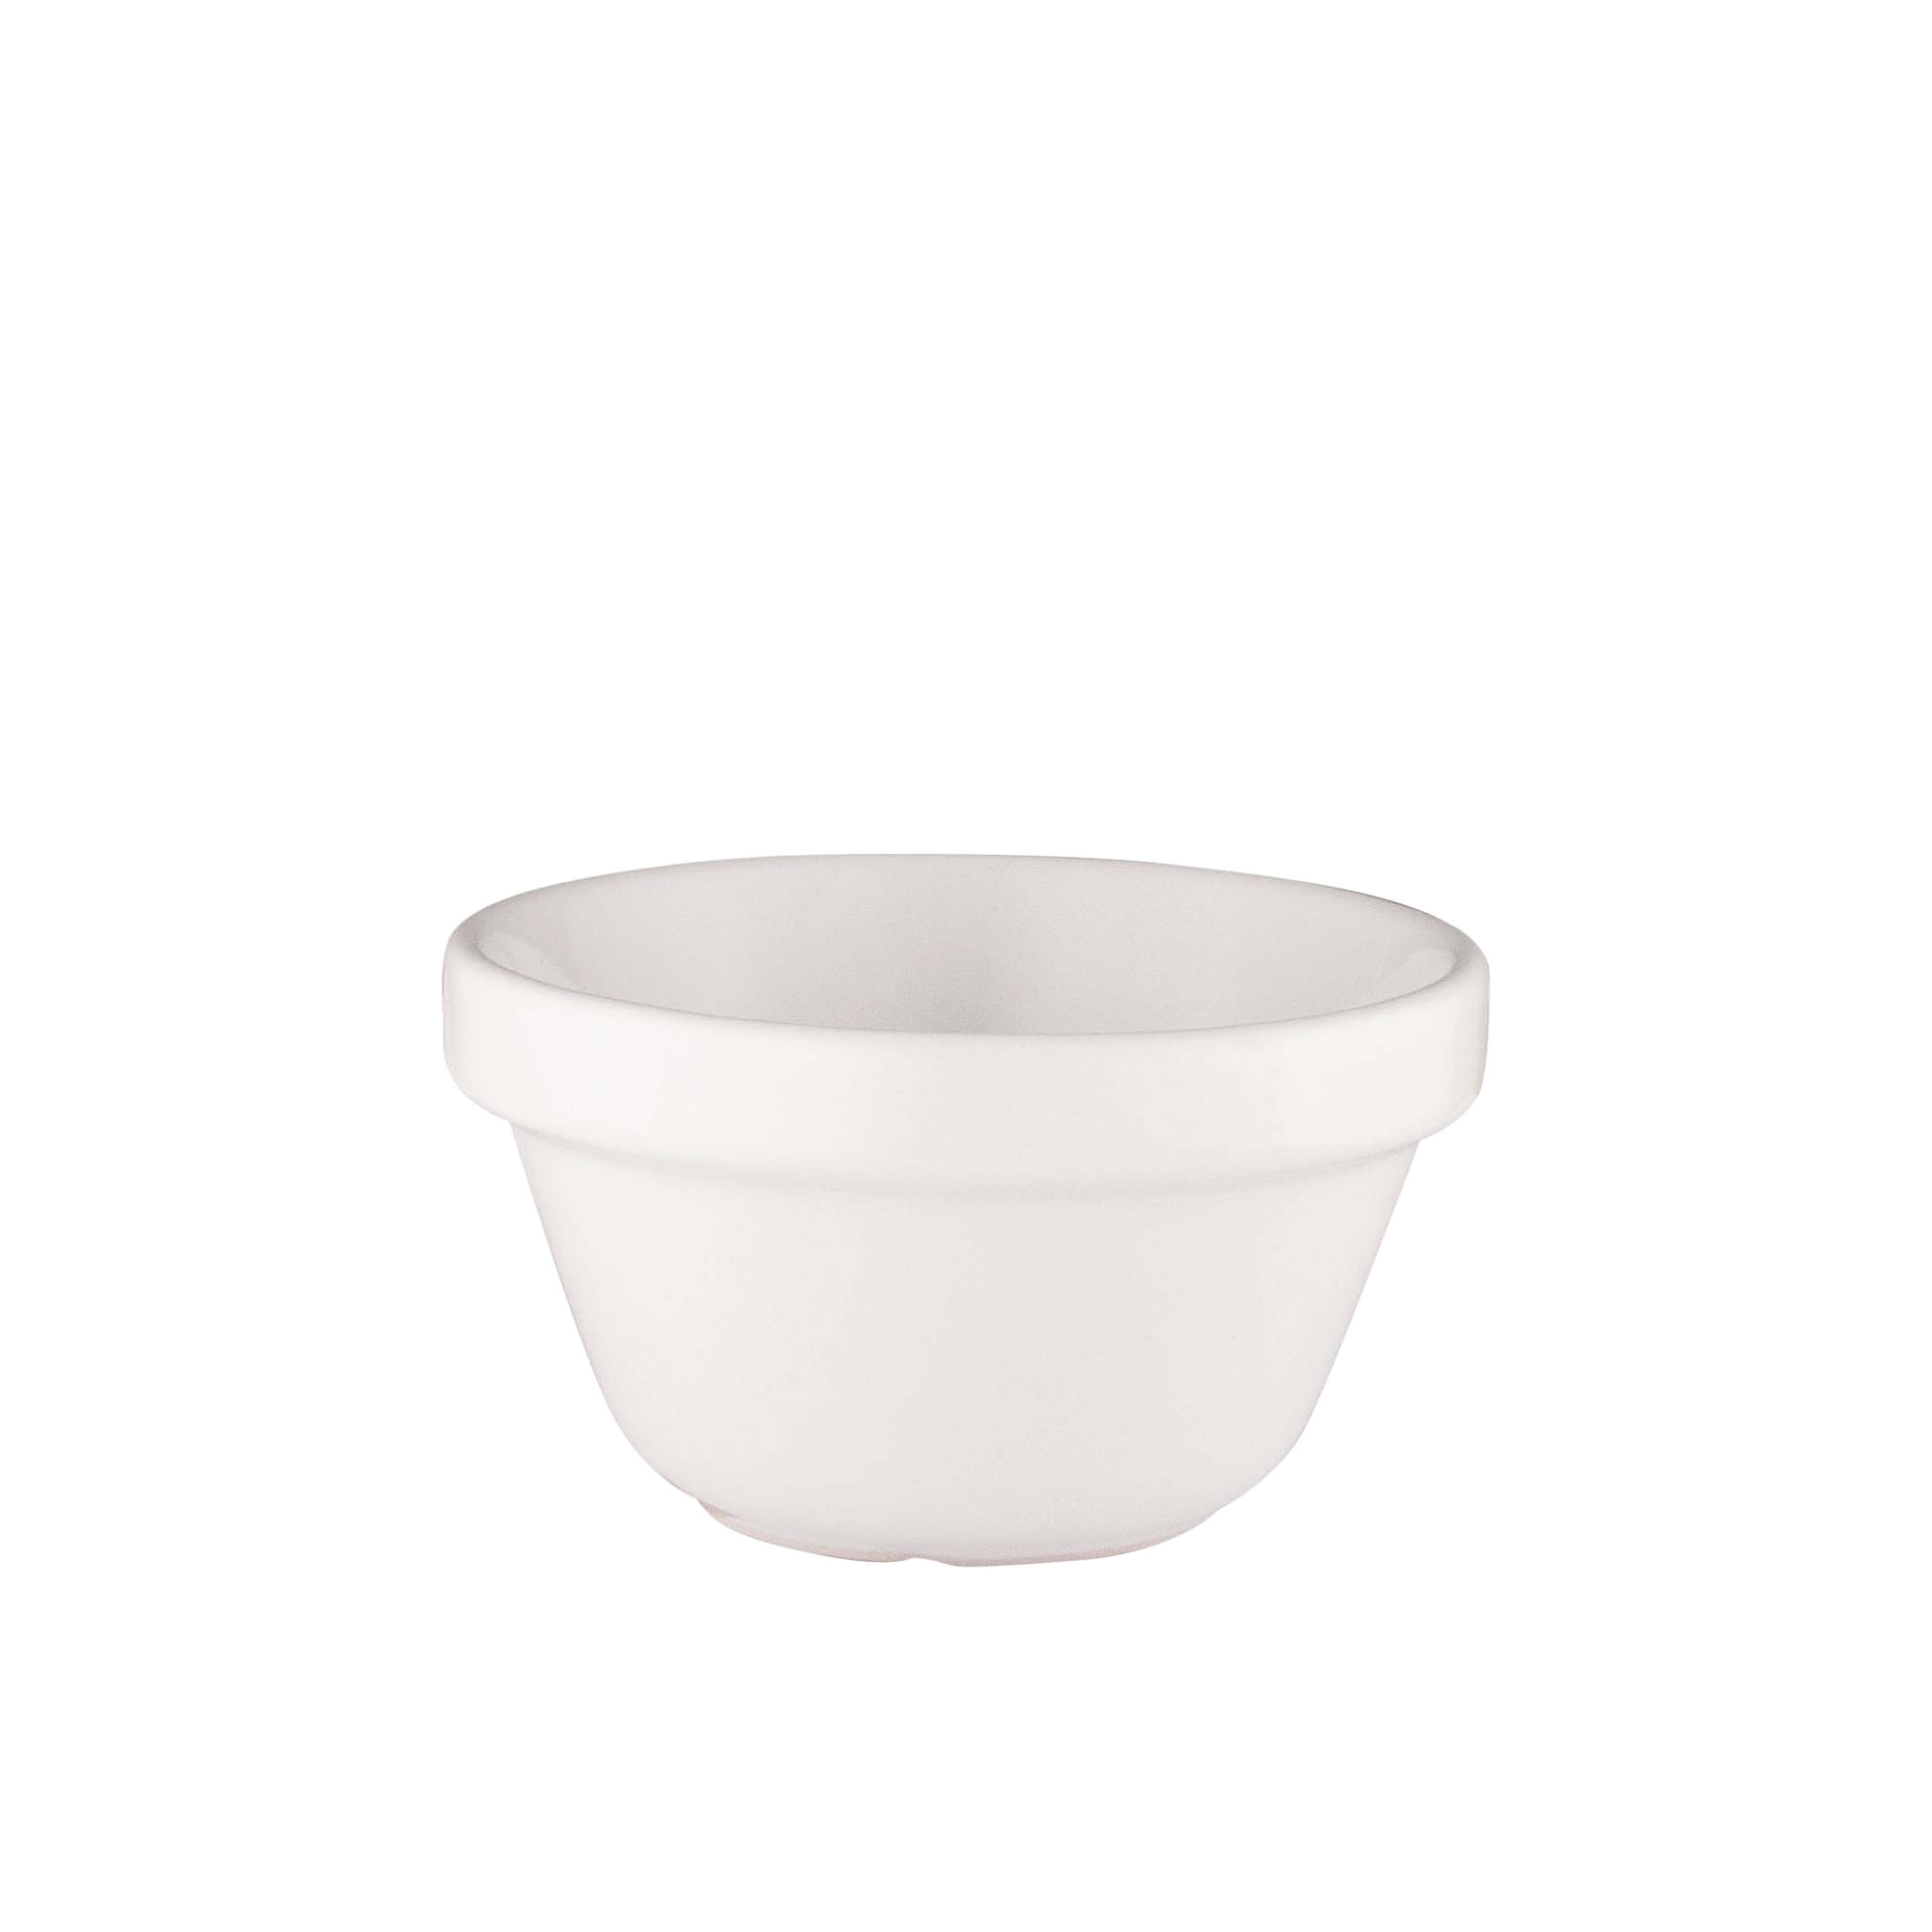 Avanti Pudding Bowl 13cm 350ml White Image 1